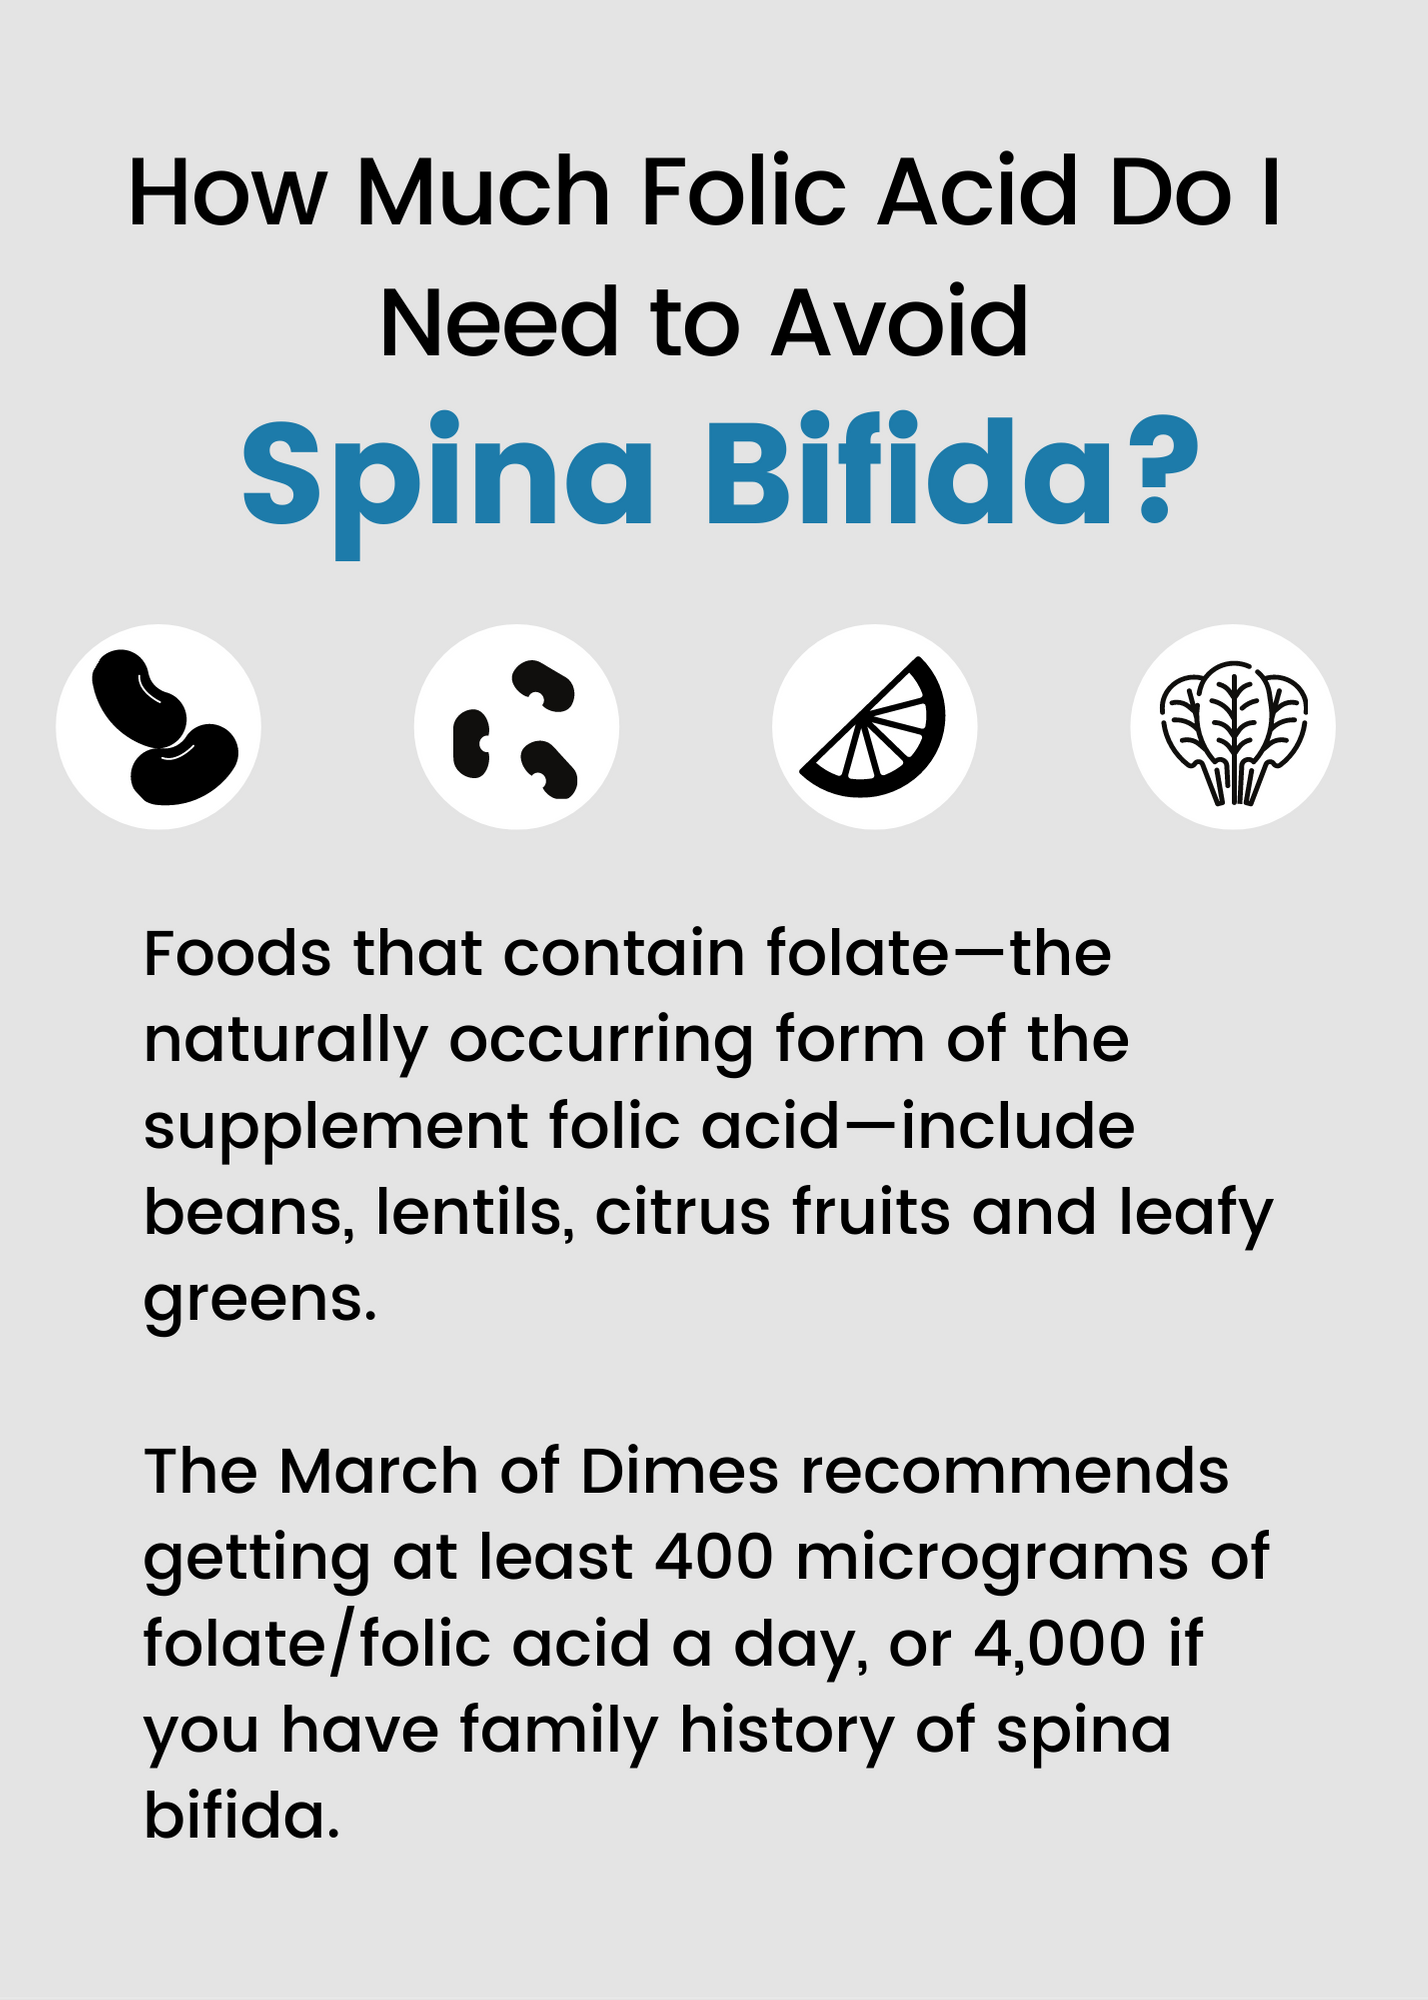 spina bifida life expectancy